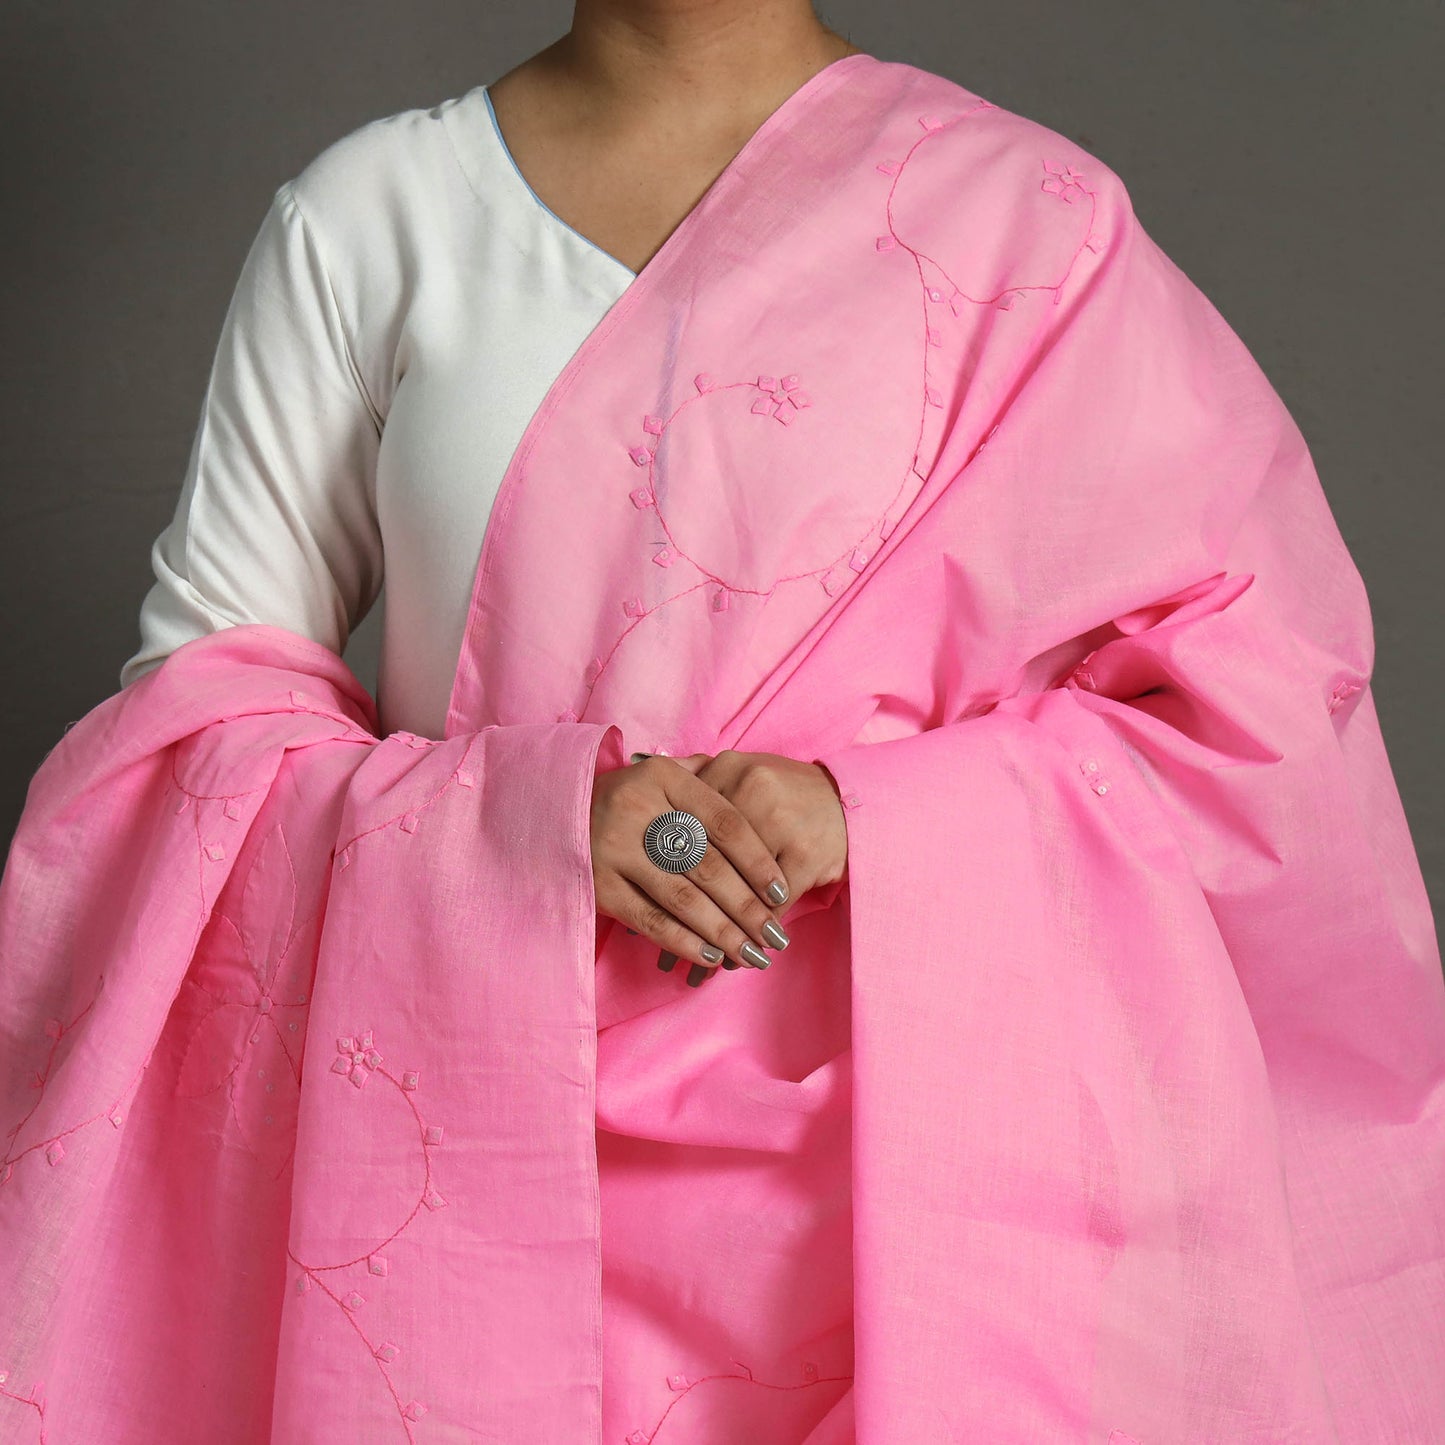 Pink - Patti Kaam Applique Work Cotton Dupatta from Rampur 12